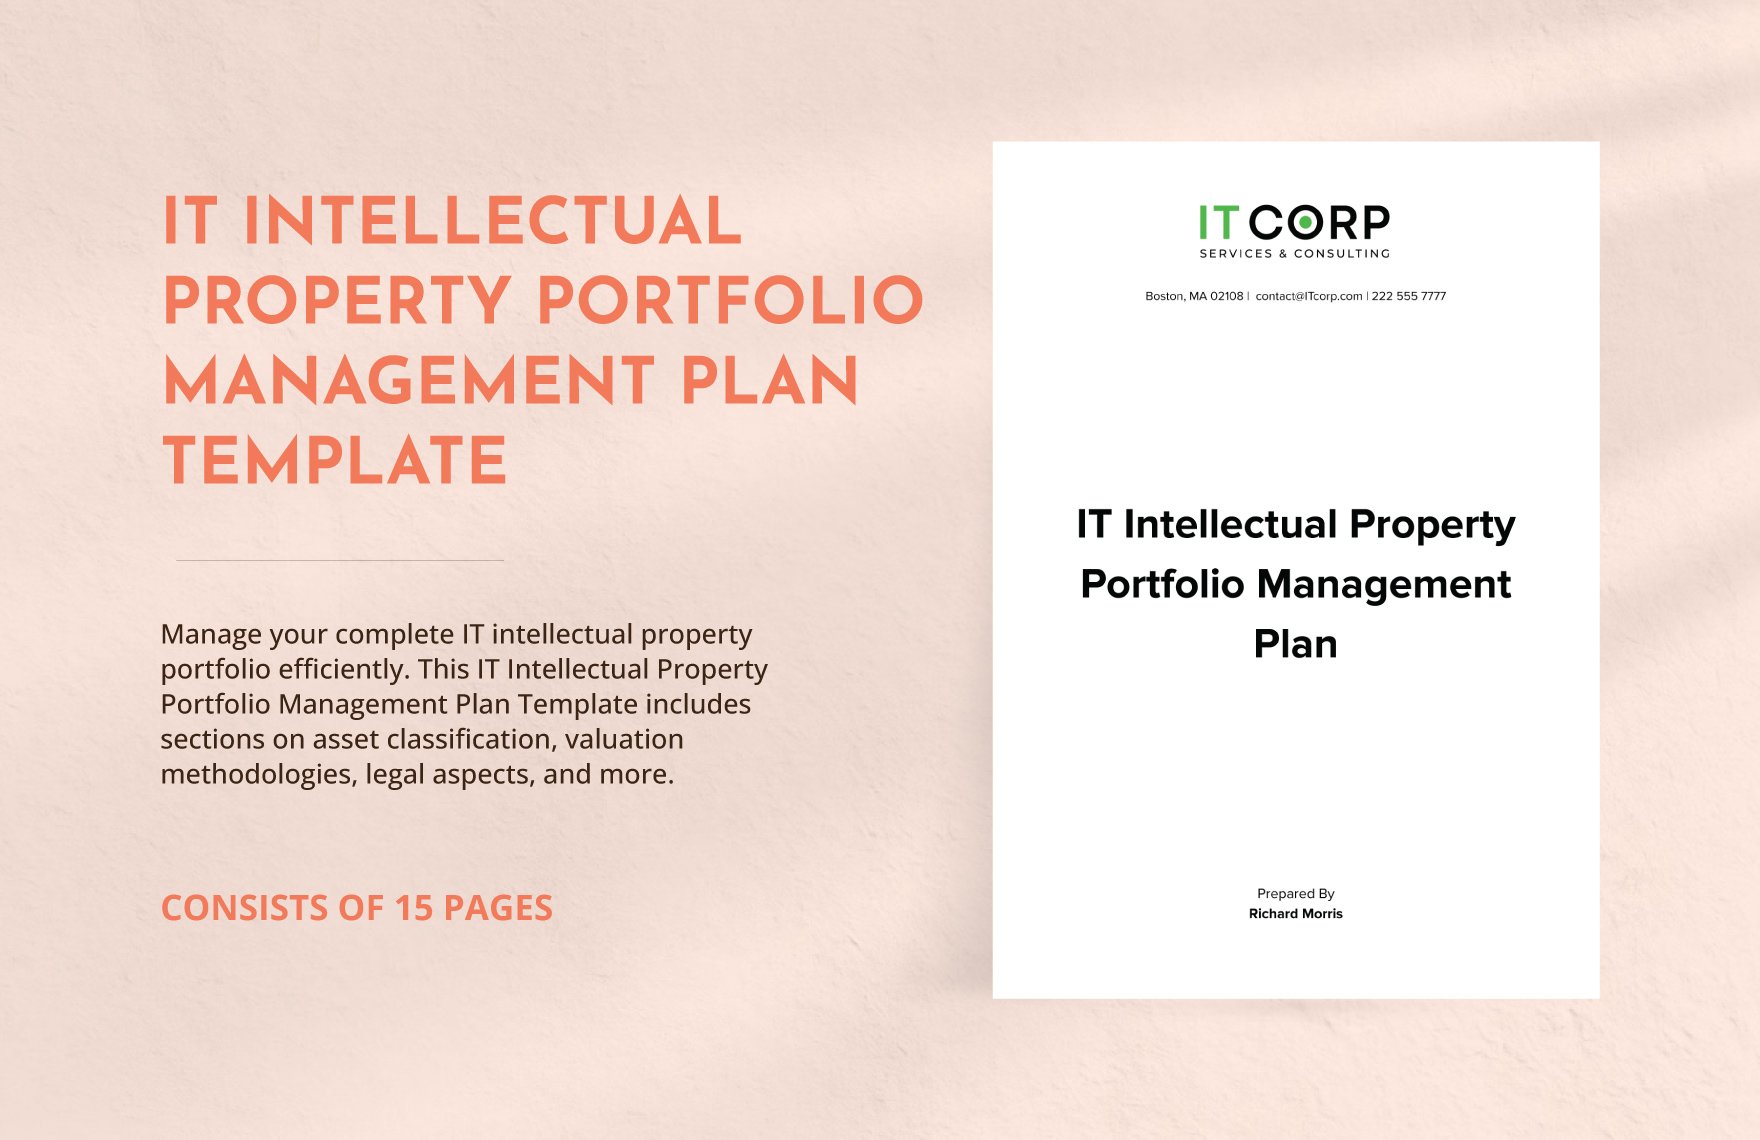 IT Intellectual Property Portfolio Management Plan Template